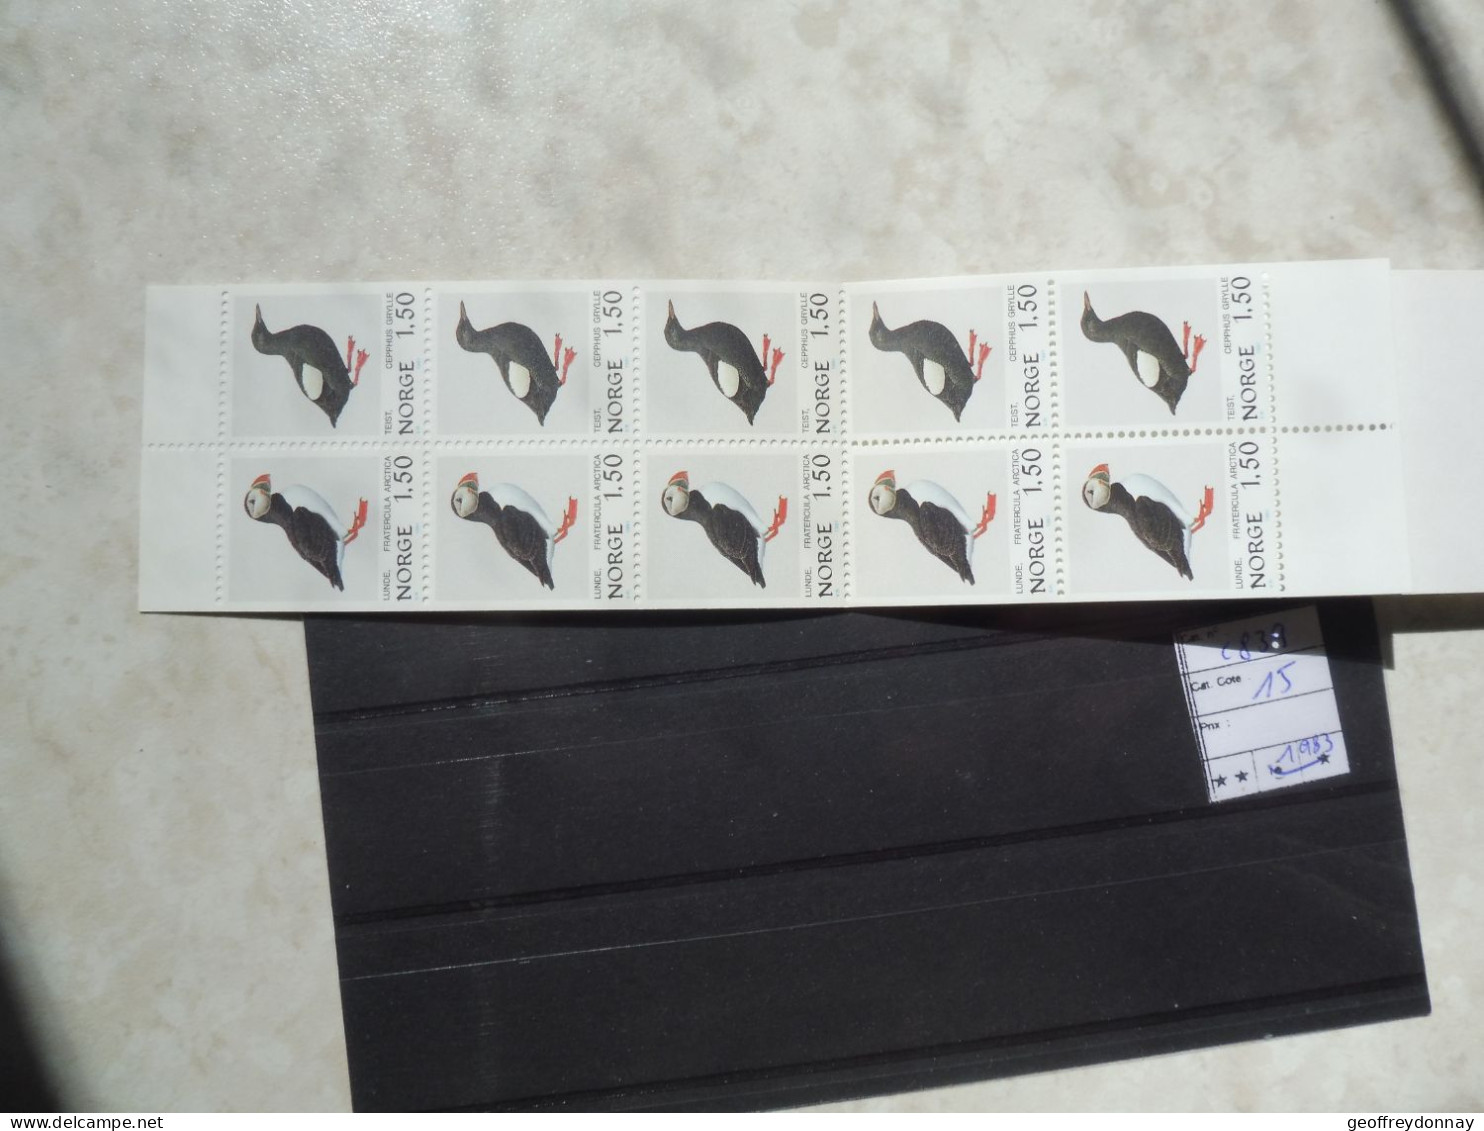 Norge Norvege Norway  C 839 Mnh Neuf ** 1983 Oiseaux Vogels Birds - Unused Stamps